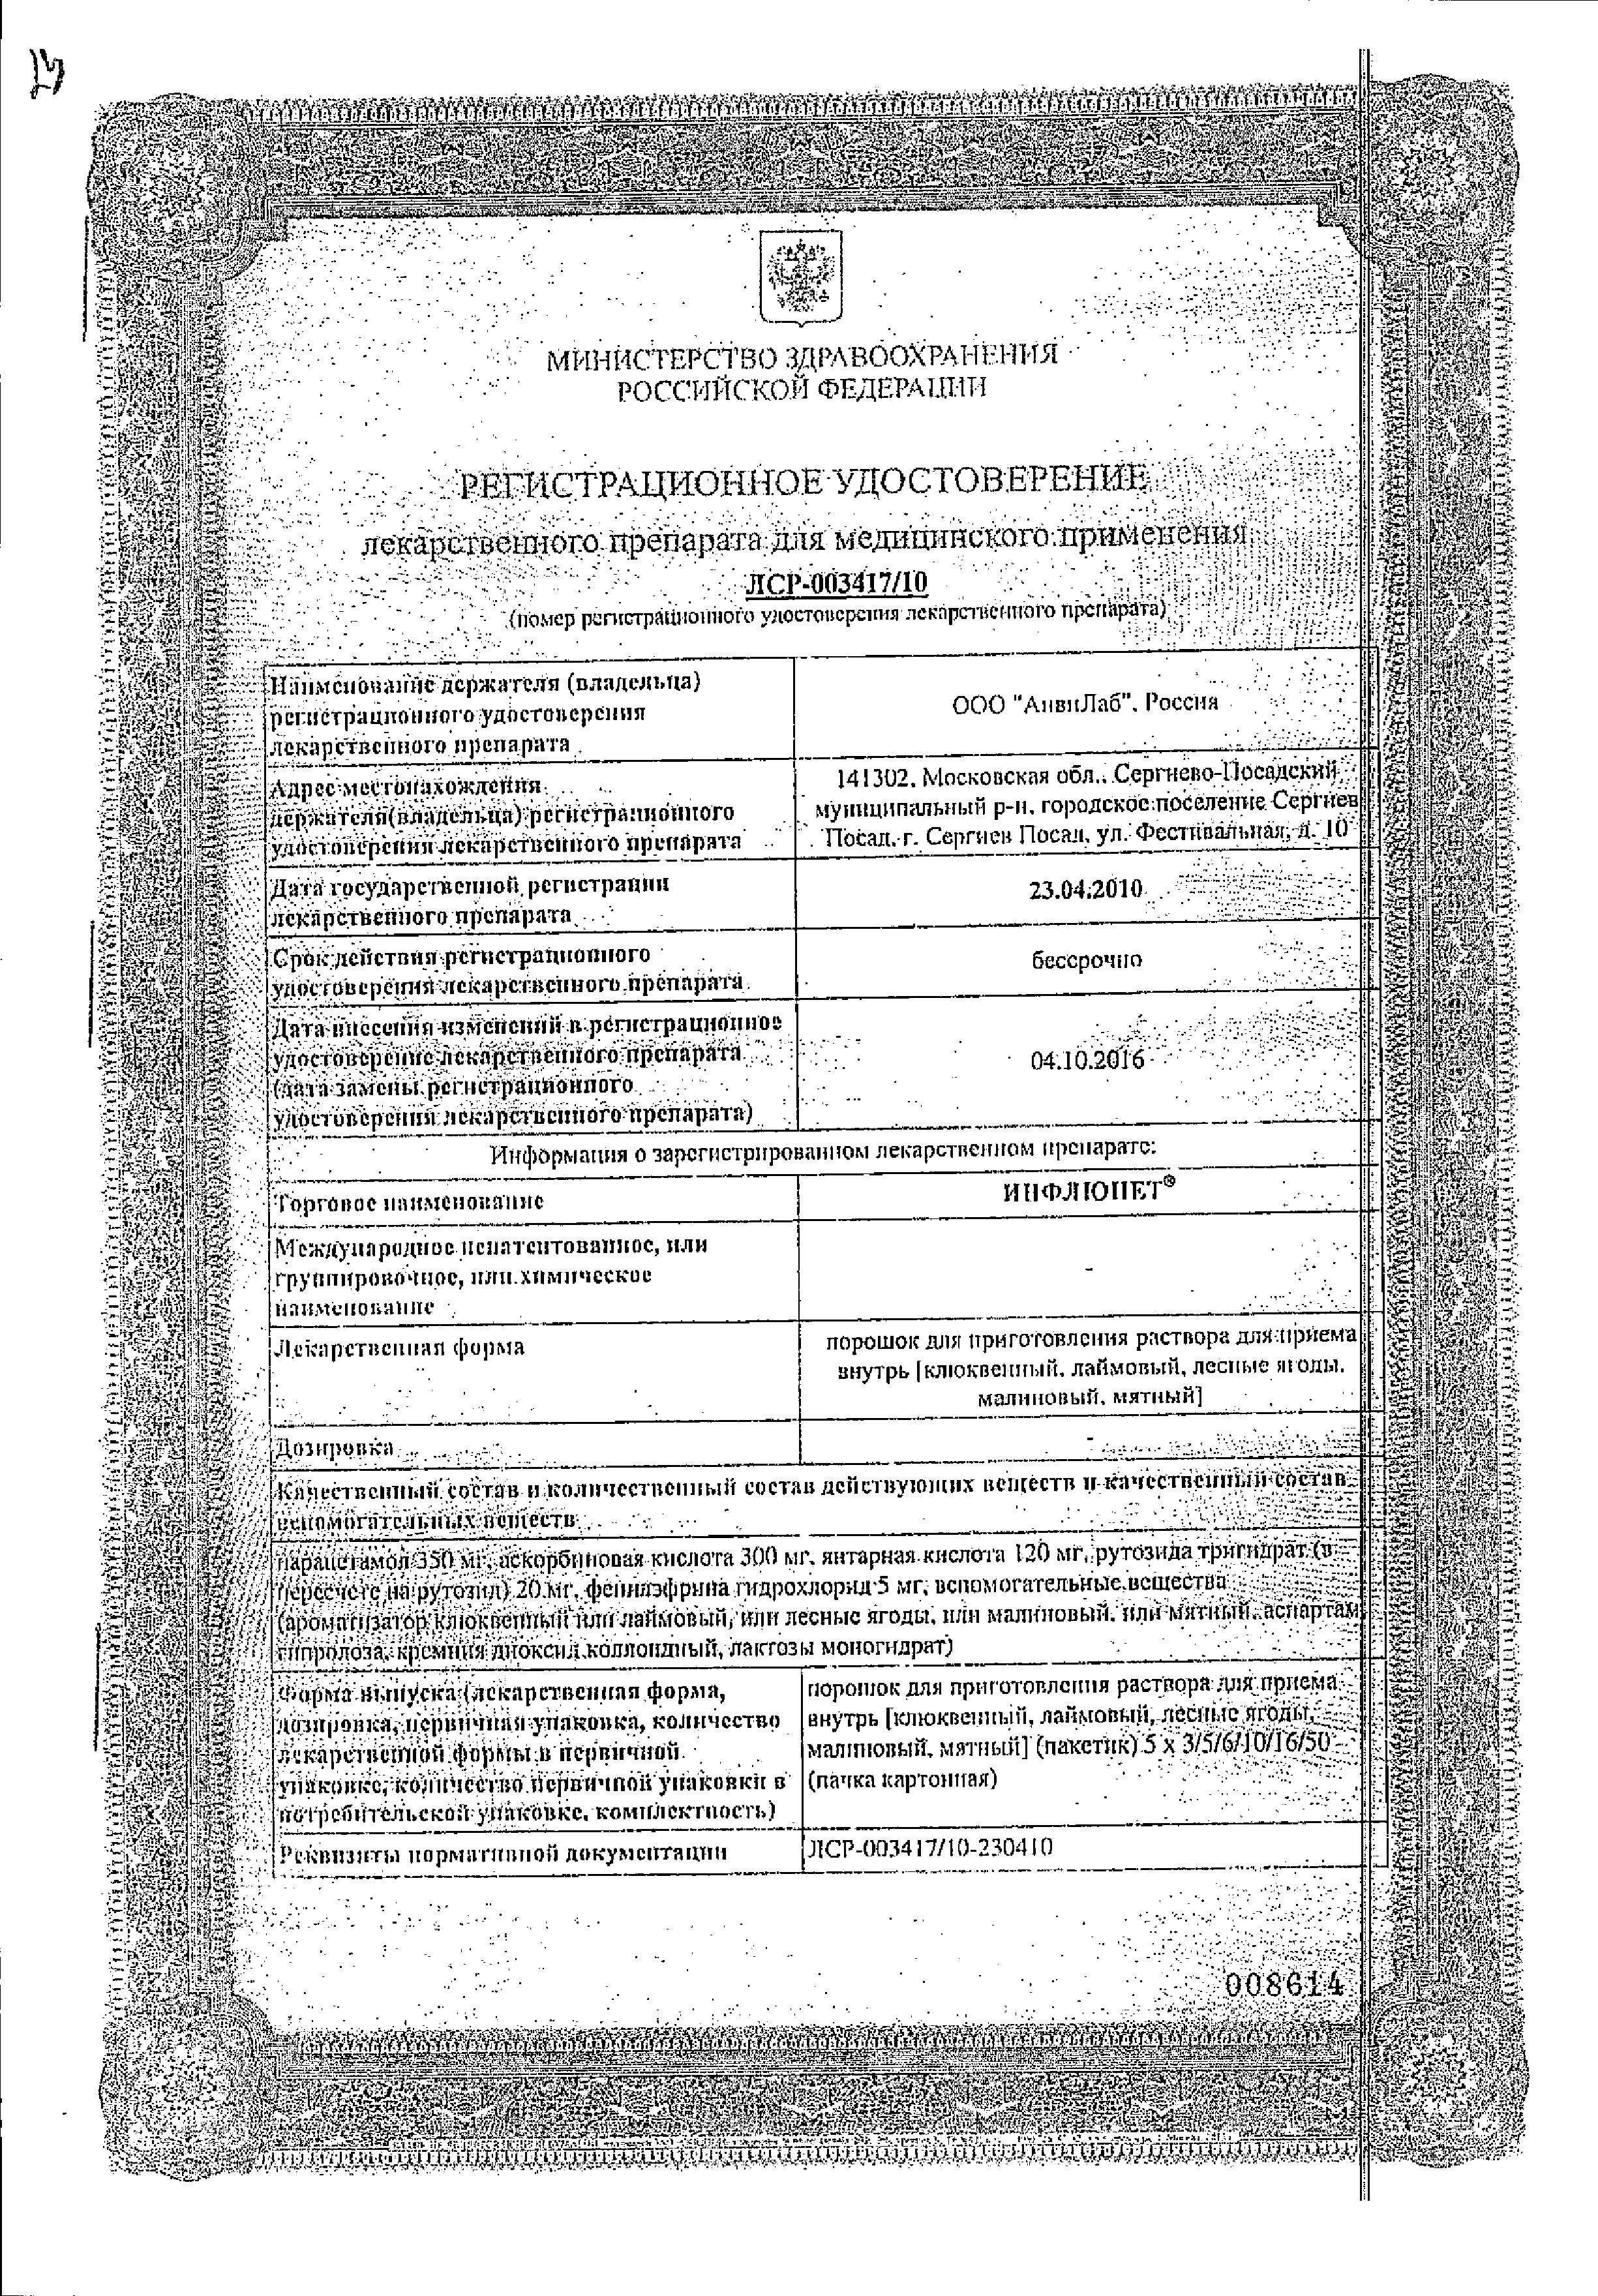 Инфлюнет сертификат